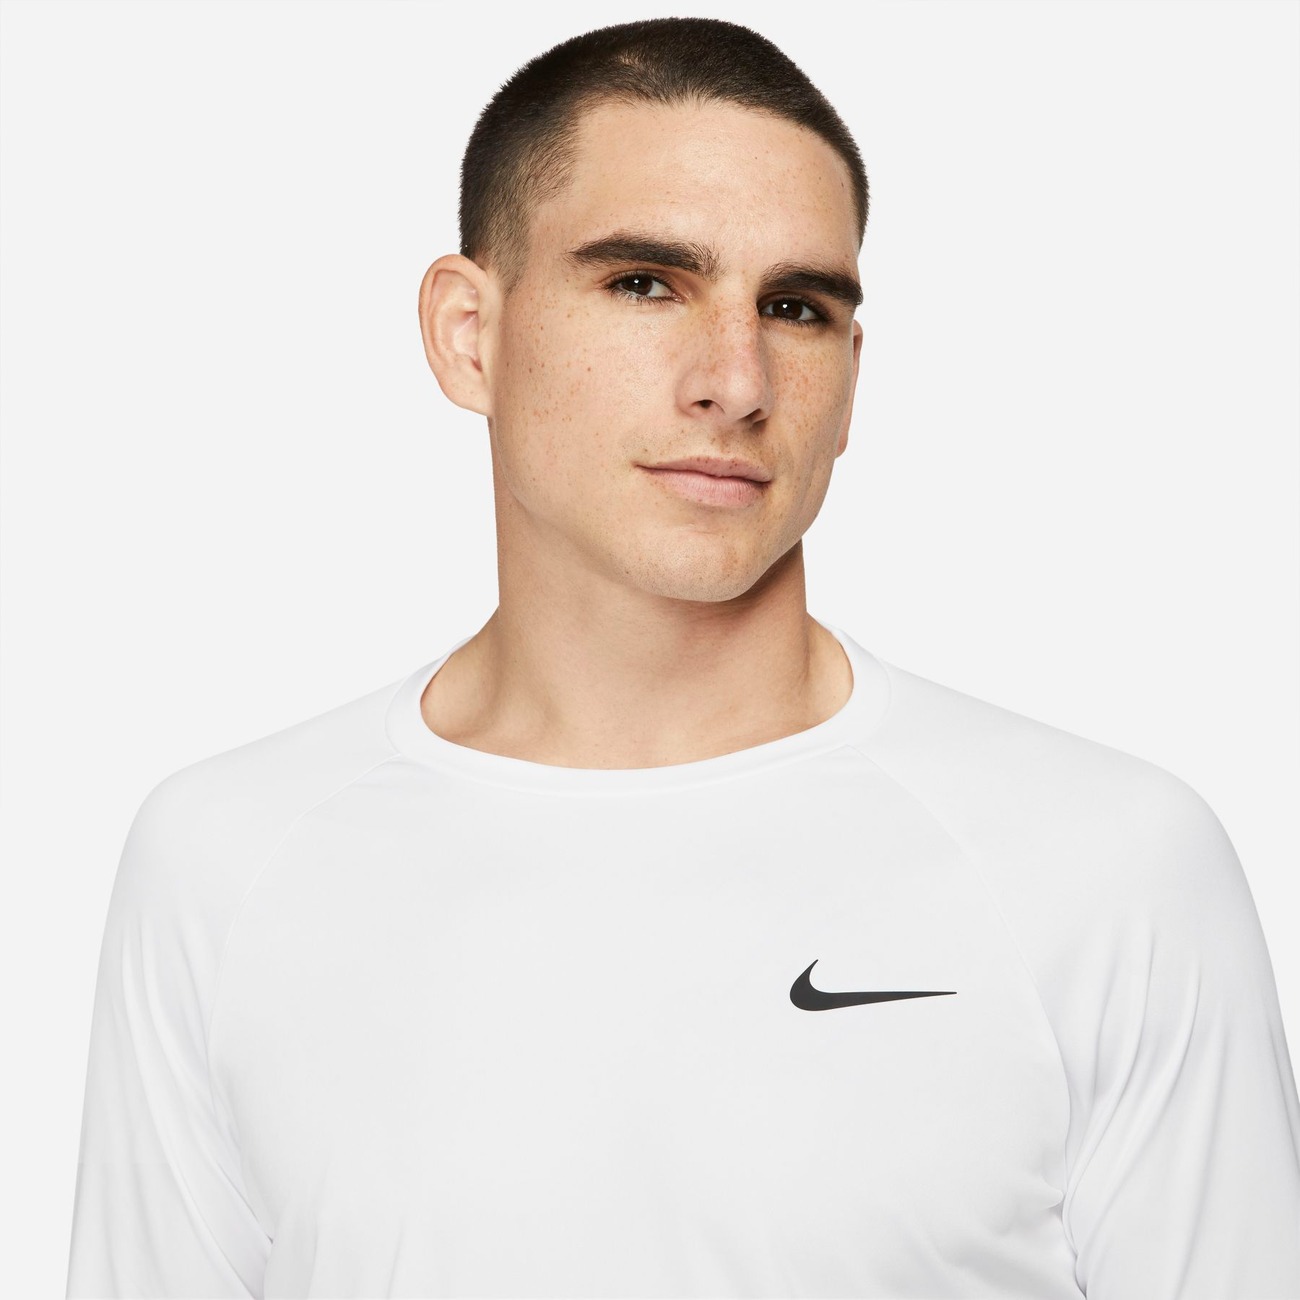 Camiseta Nike Hydroguard Essential UV Masculina - Foto 3